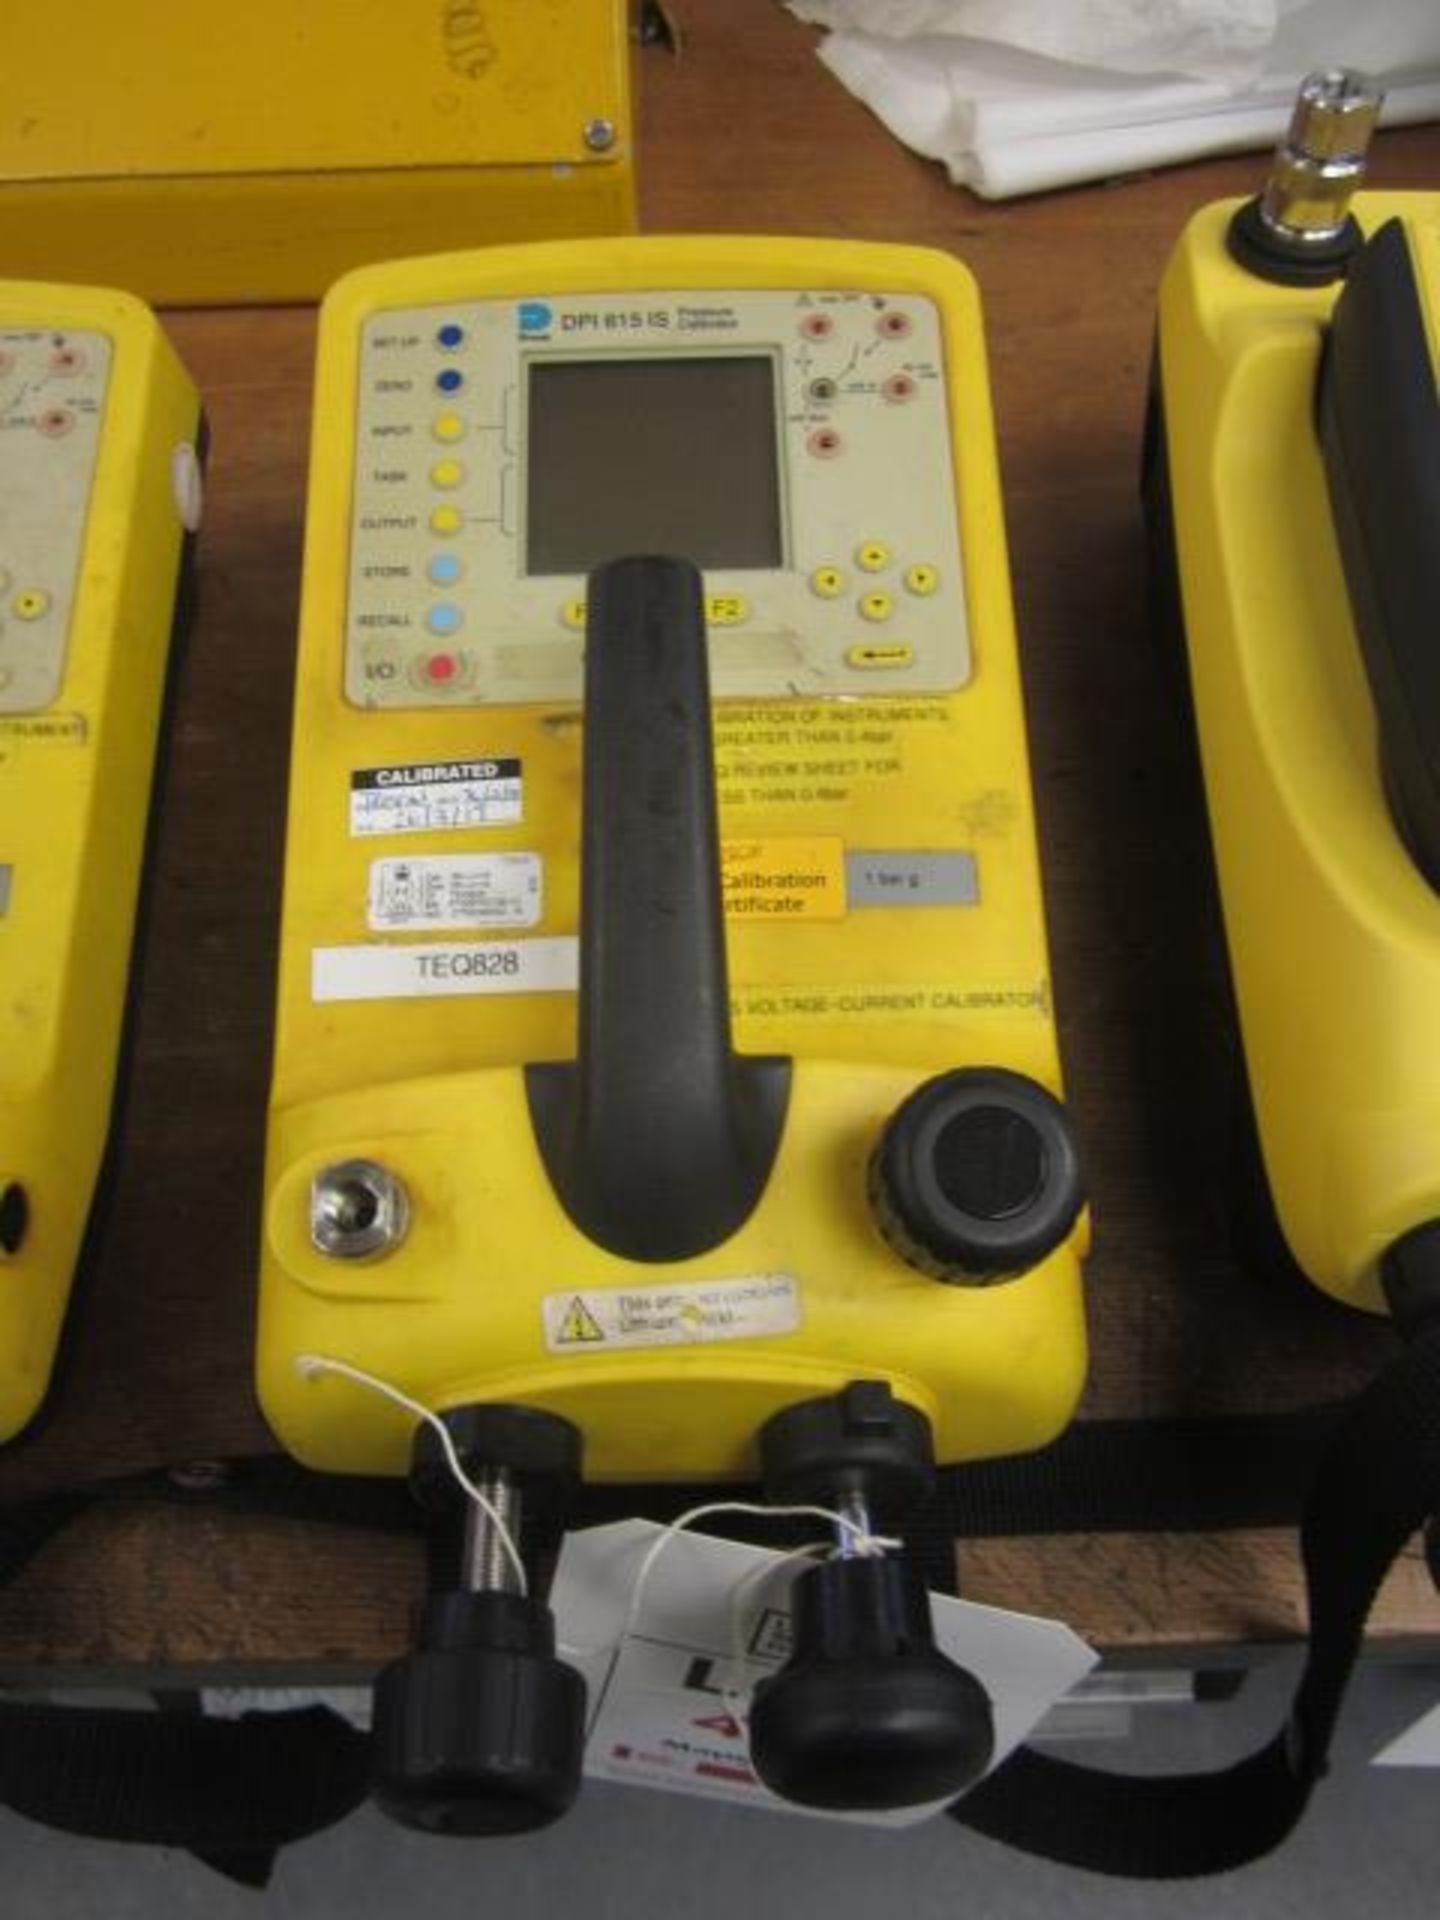 Druck DPI 615 IS pressure calibrator, serial no. 61526757/09-10